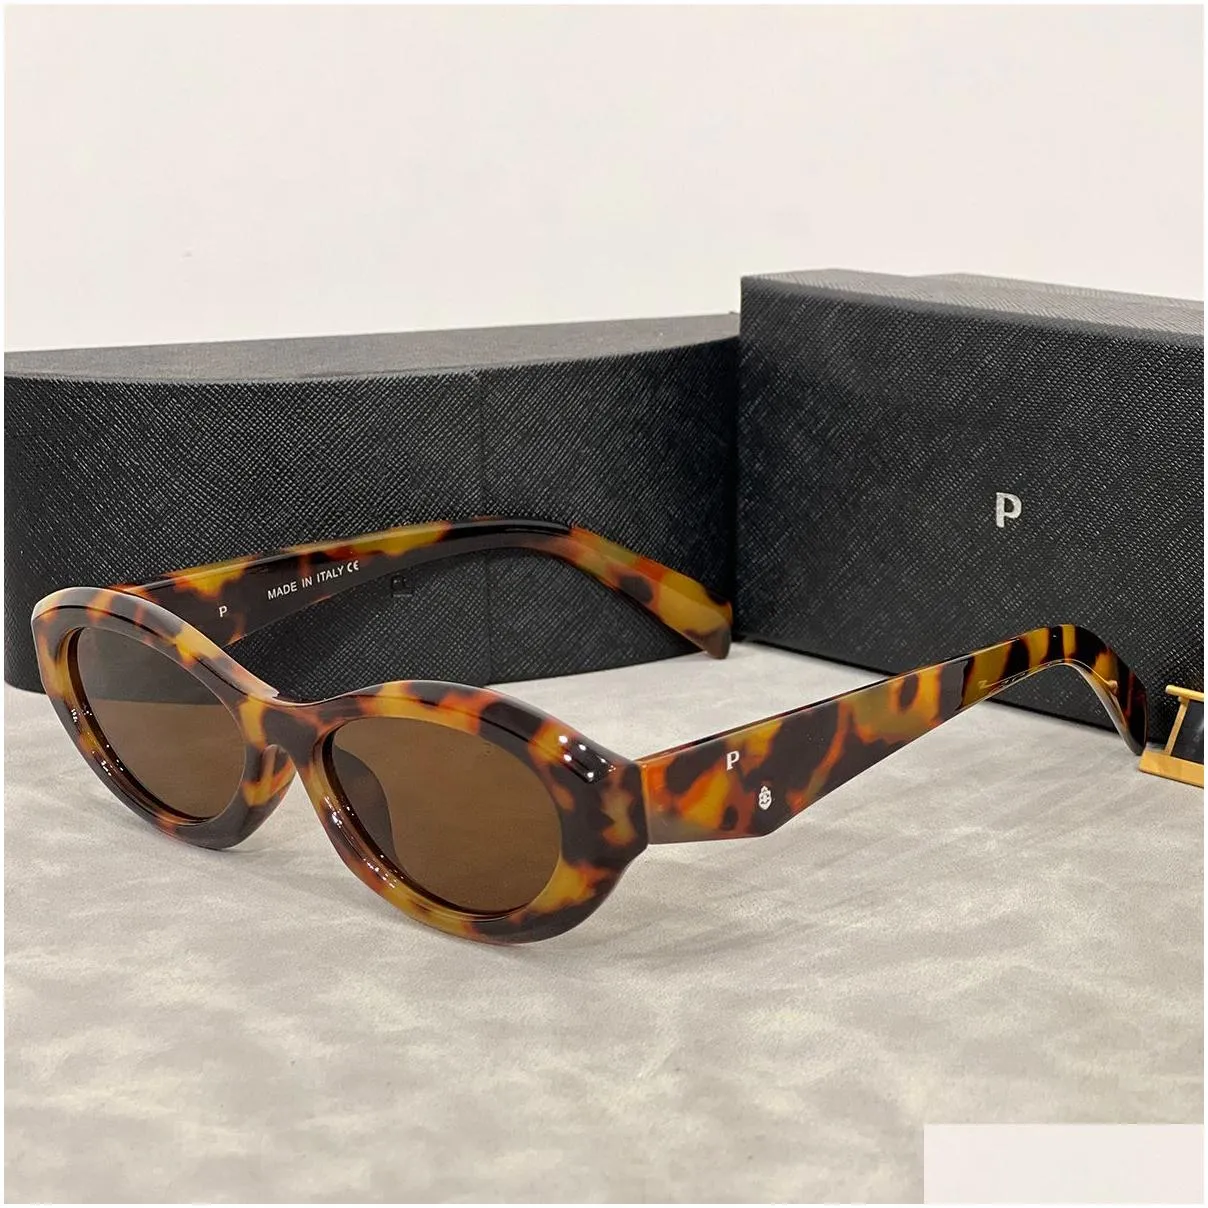 eye designer sunglasses cat ellipses for women small frame trend men gift beach shading uv protection polarized glasses with box nice